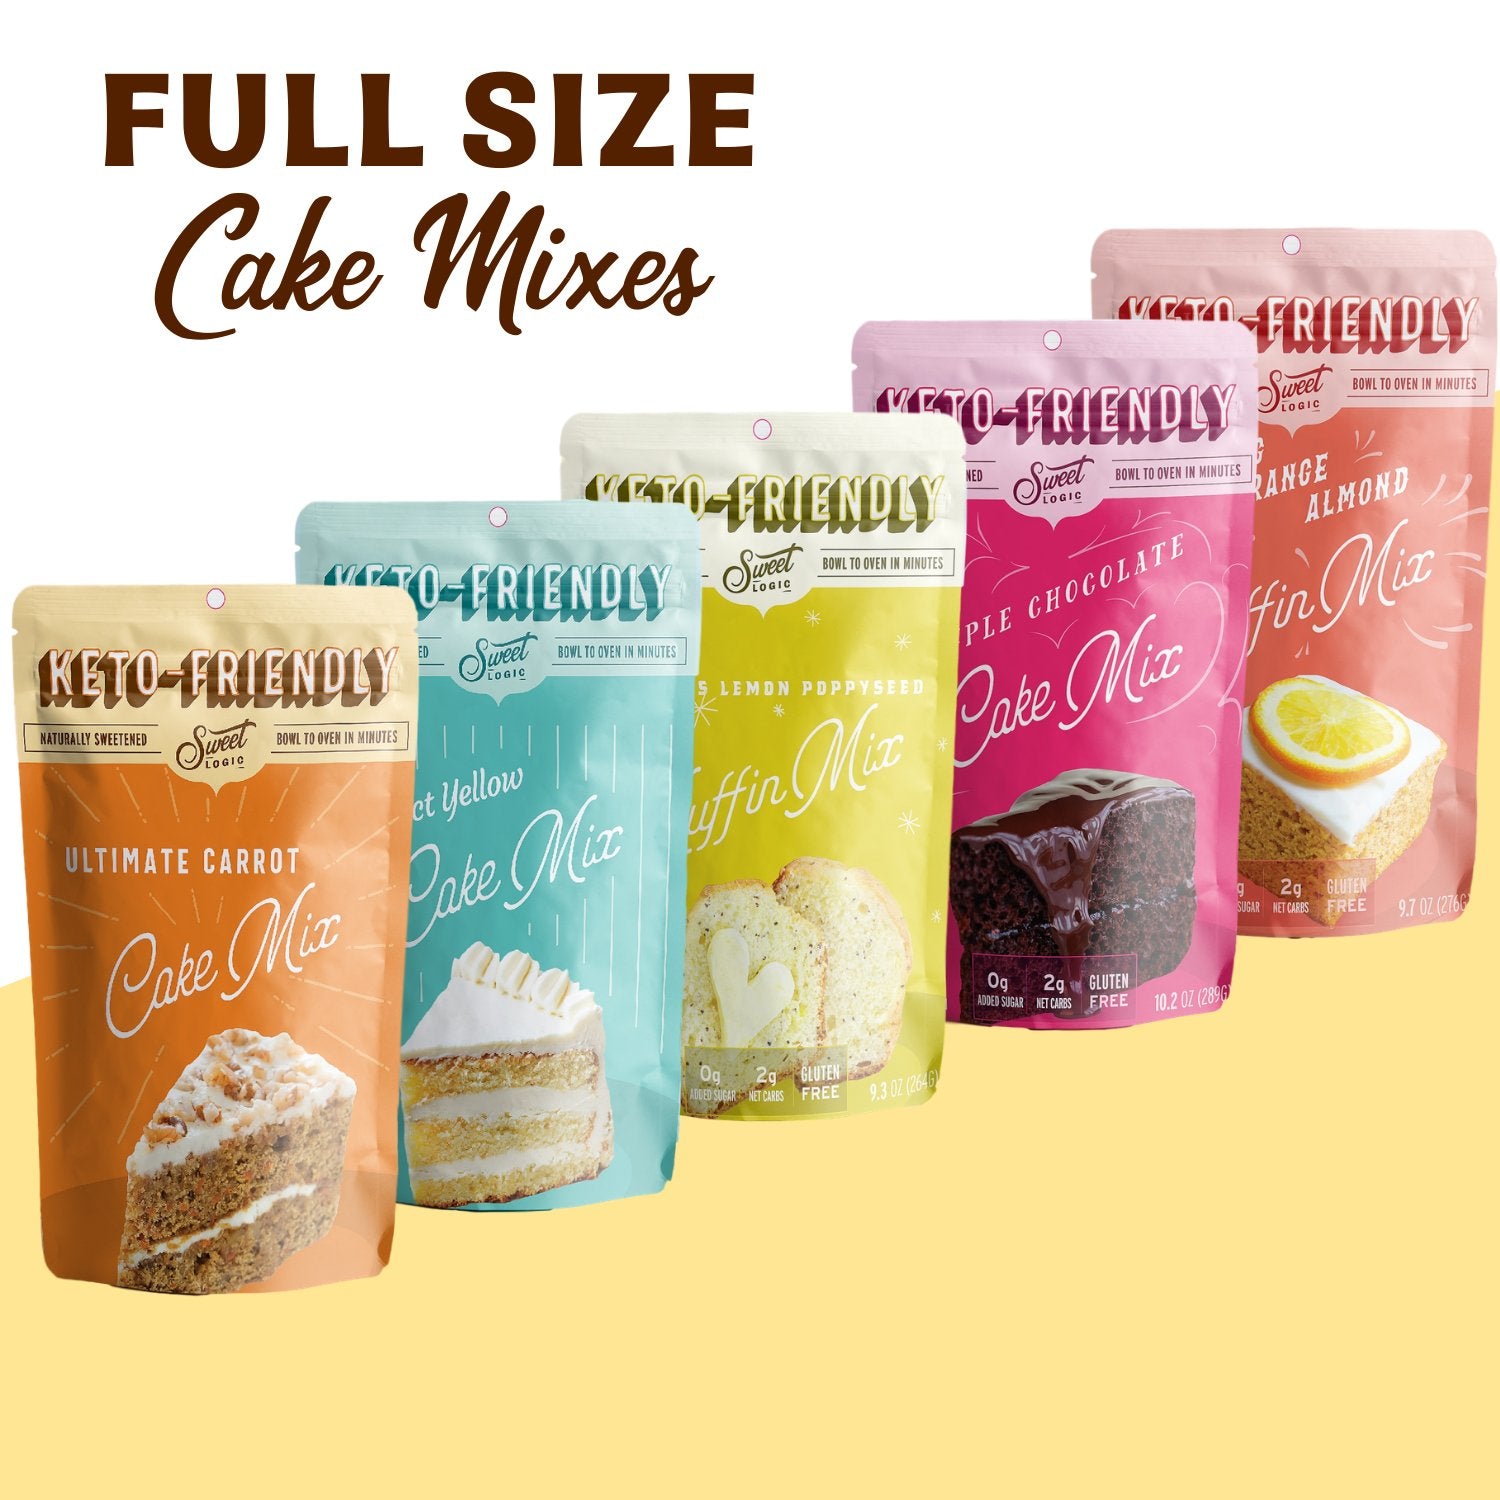 Full Size Cake Mixes